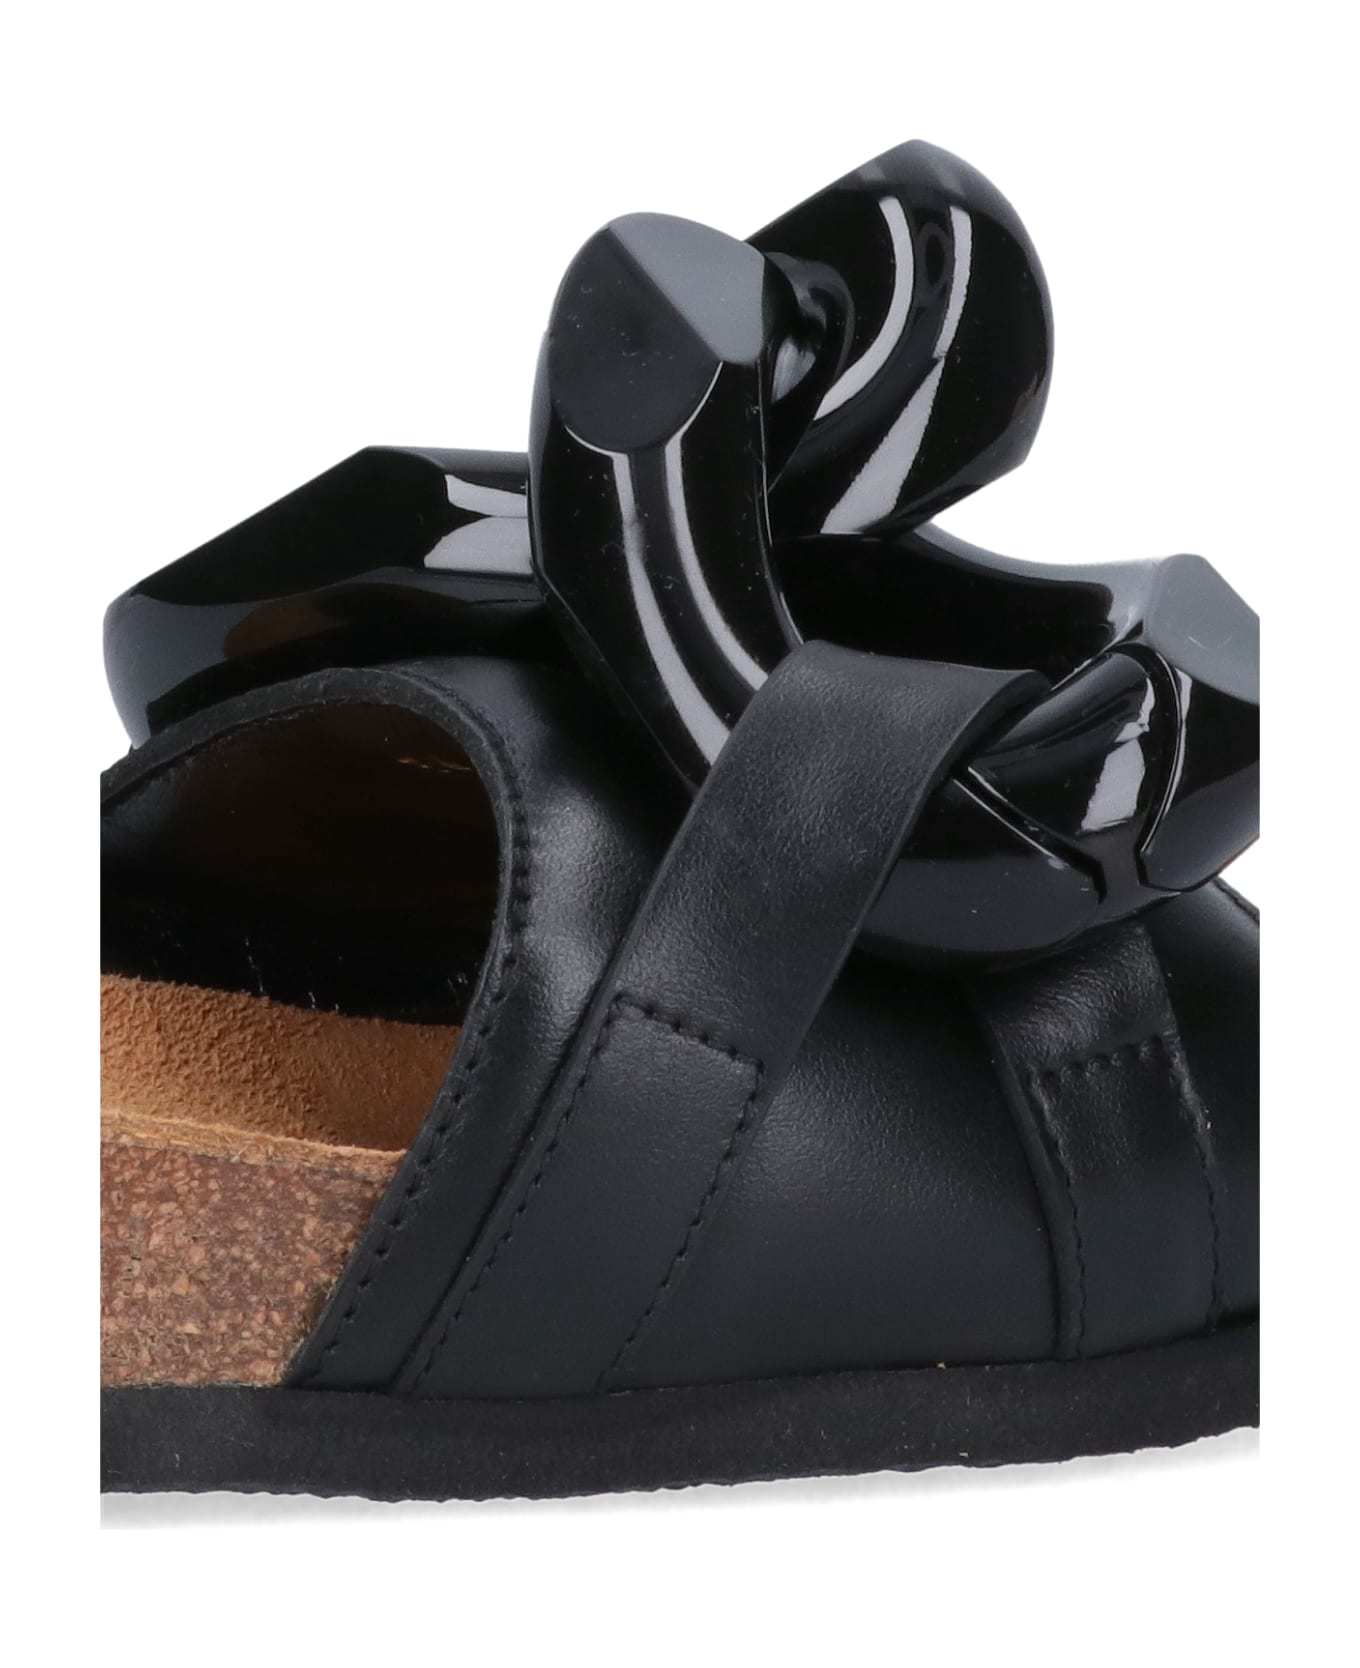 J.W. Anderson 'chain' Slide Sandals - Black   サンダル